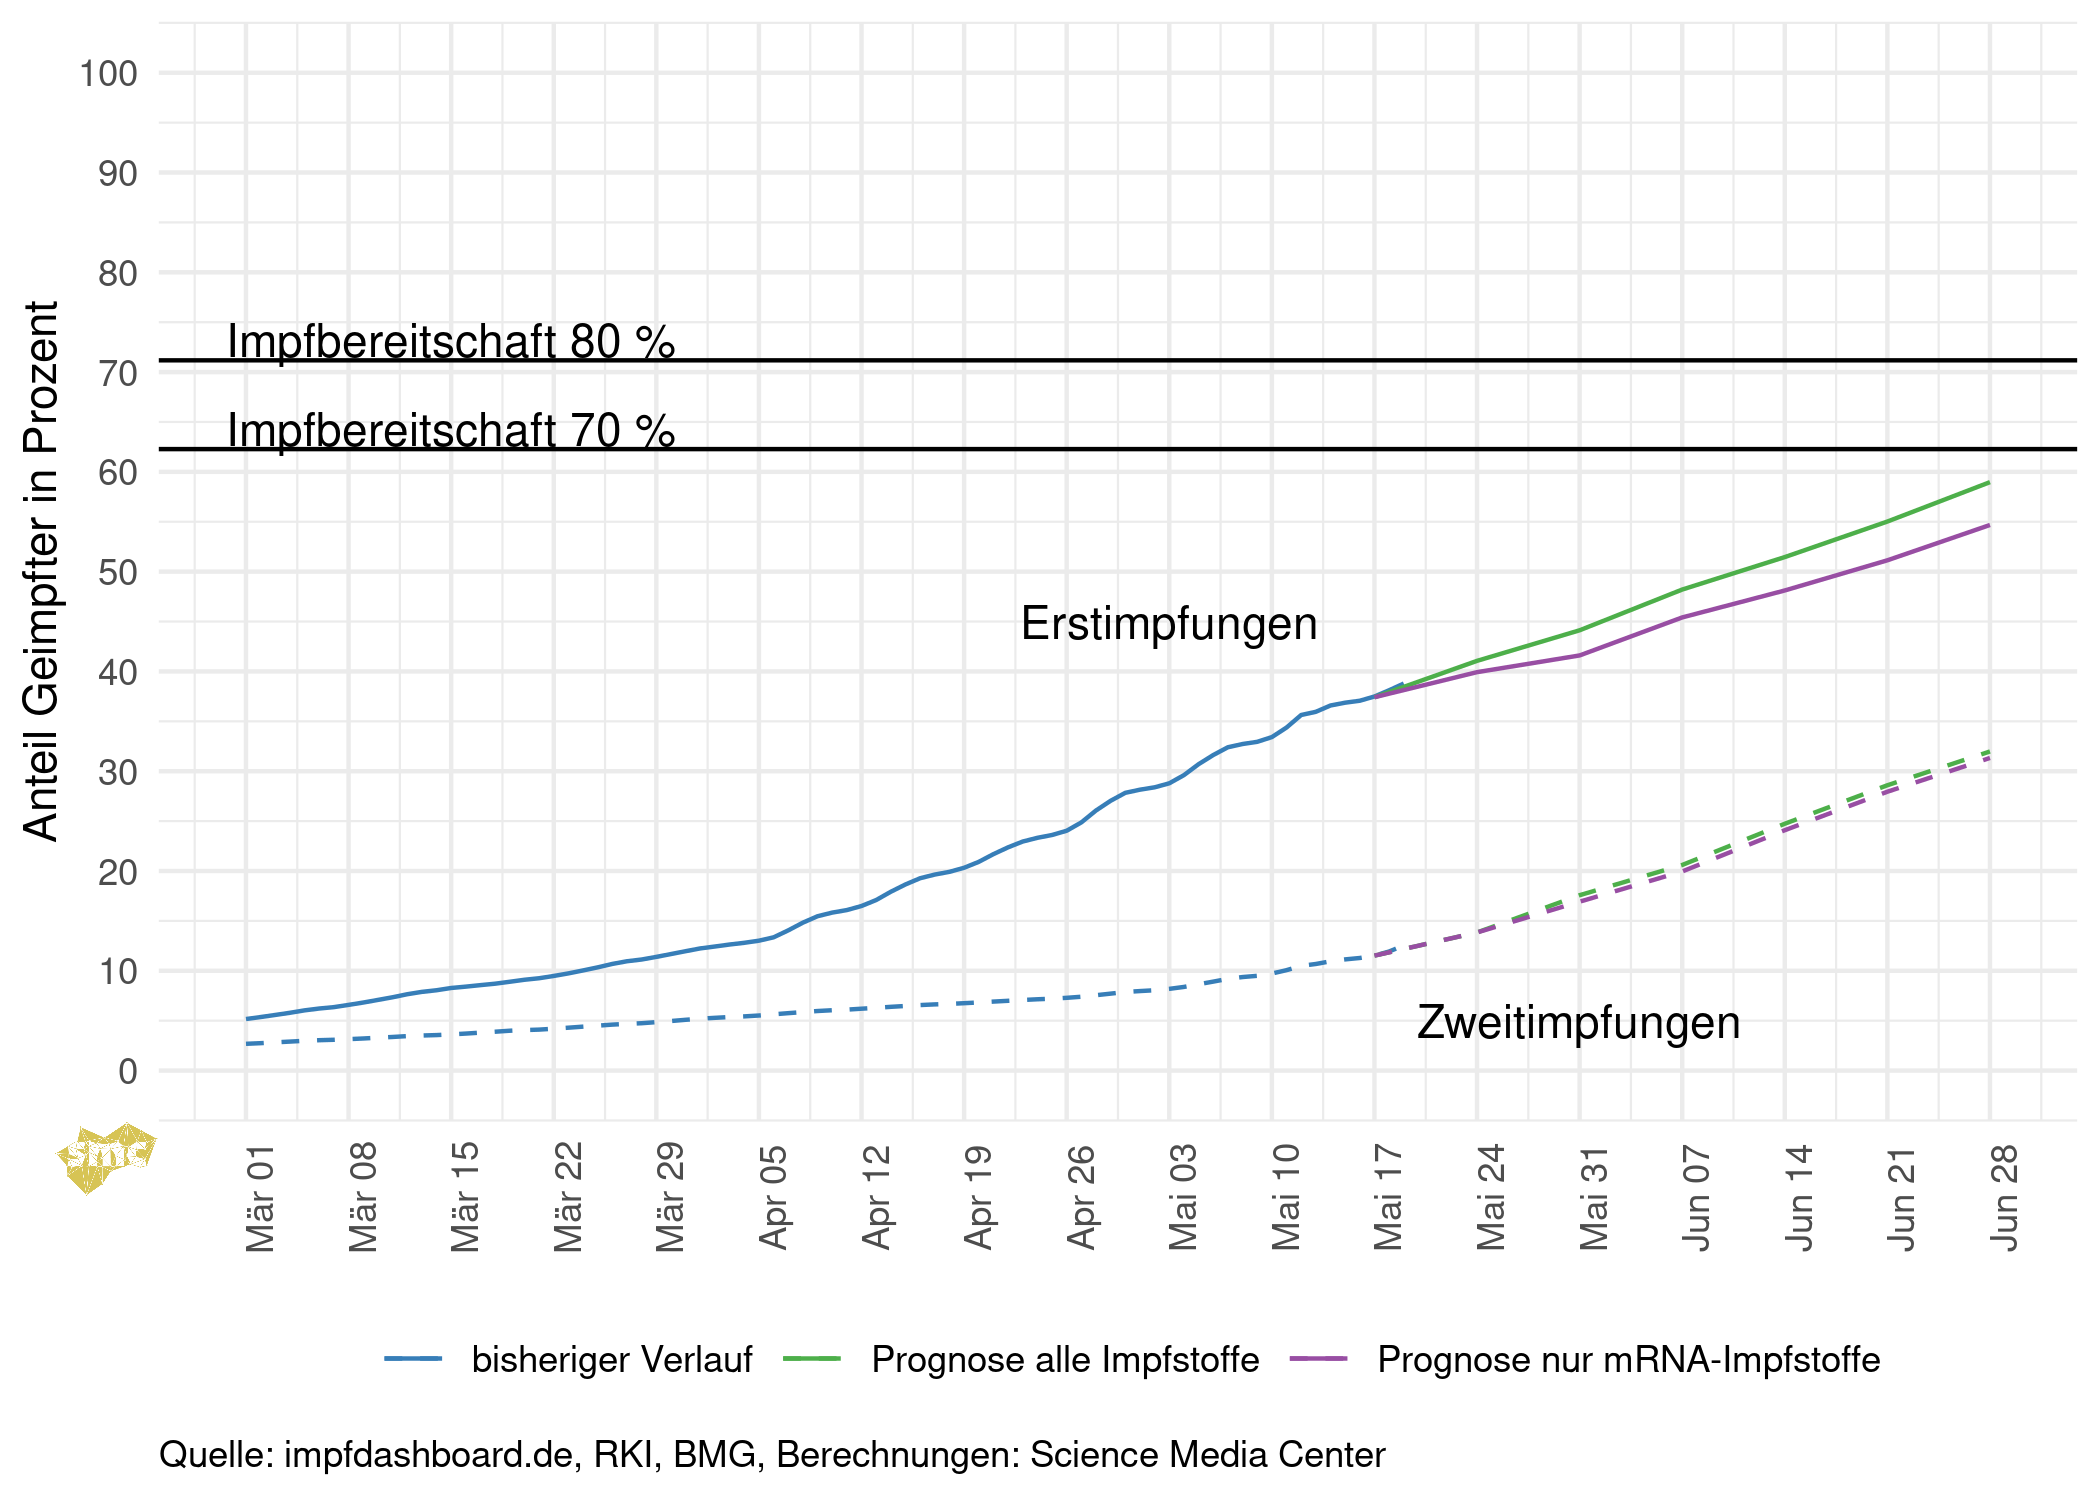 2021-05-20_Impfungen_Prognosen.png